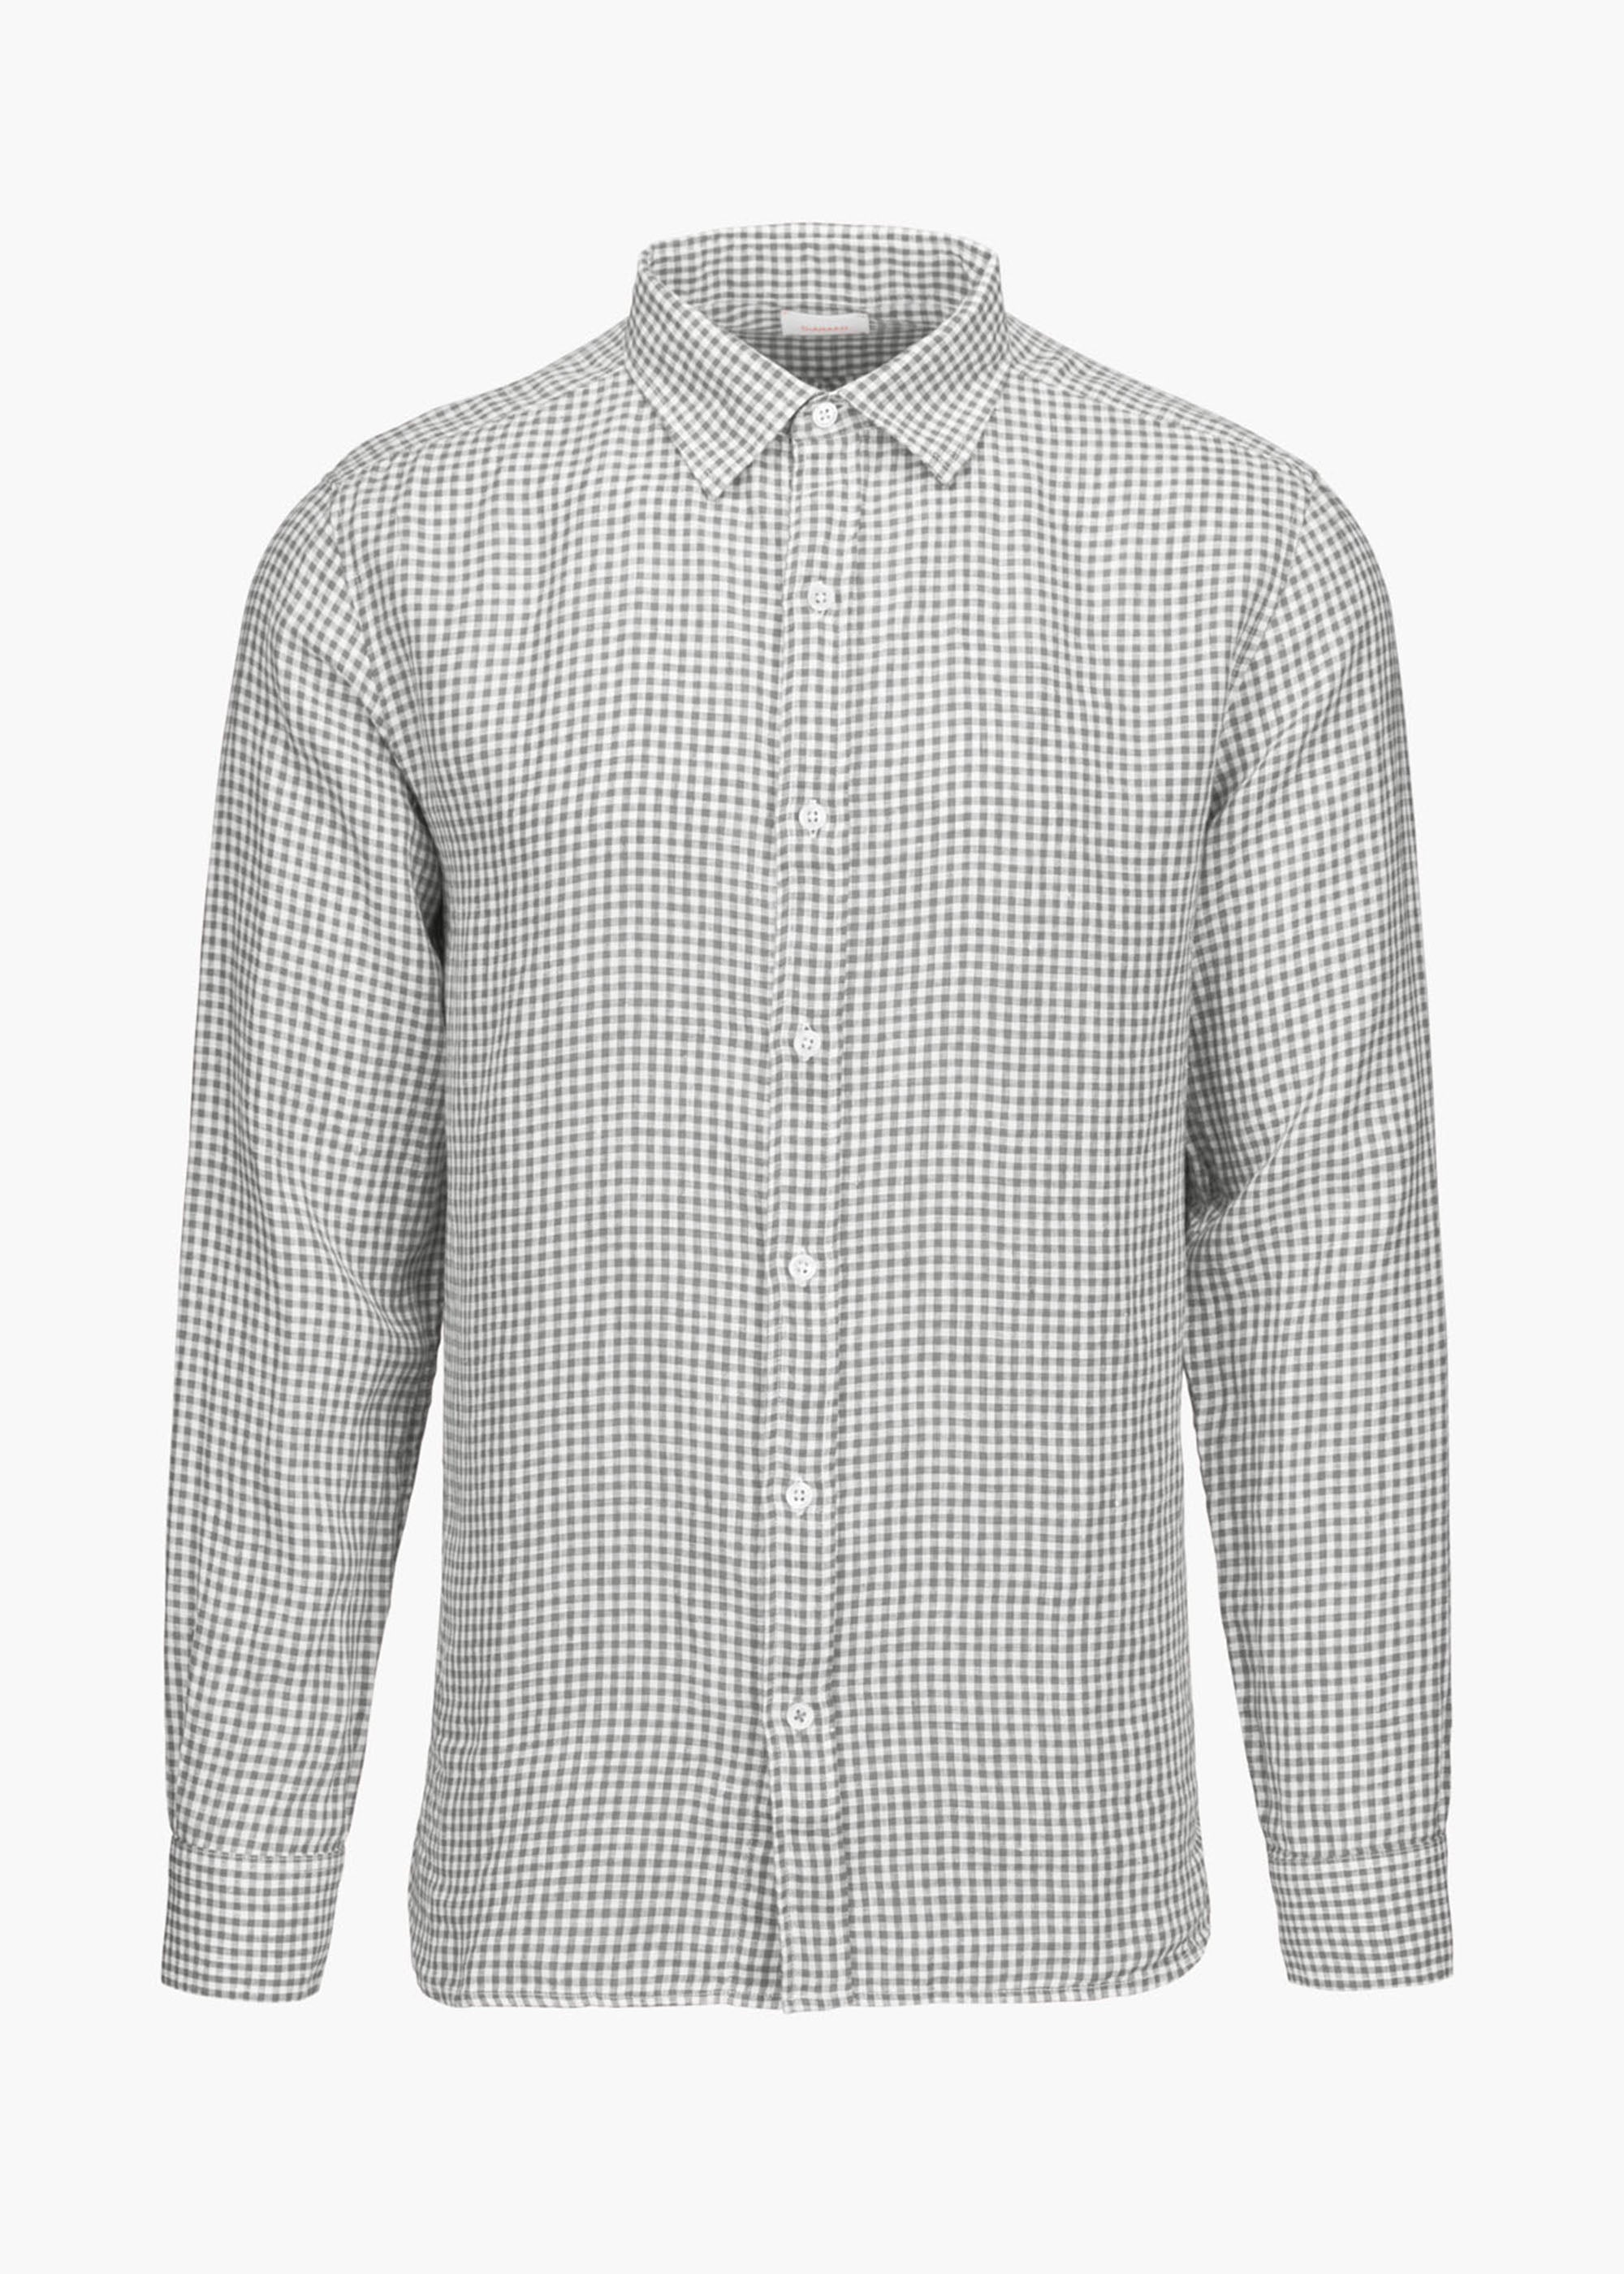 Amalfi Gingham Linen Shirt - background::white,variant::Hickory Gingham